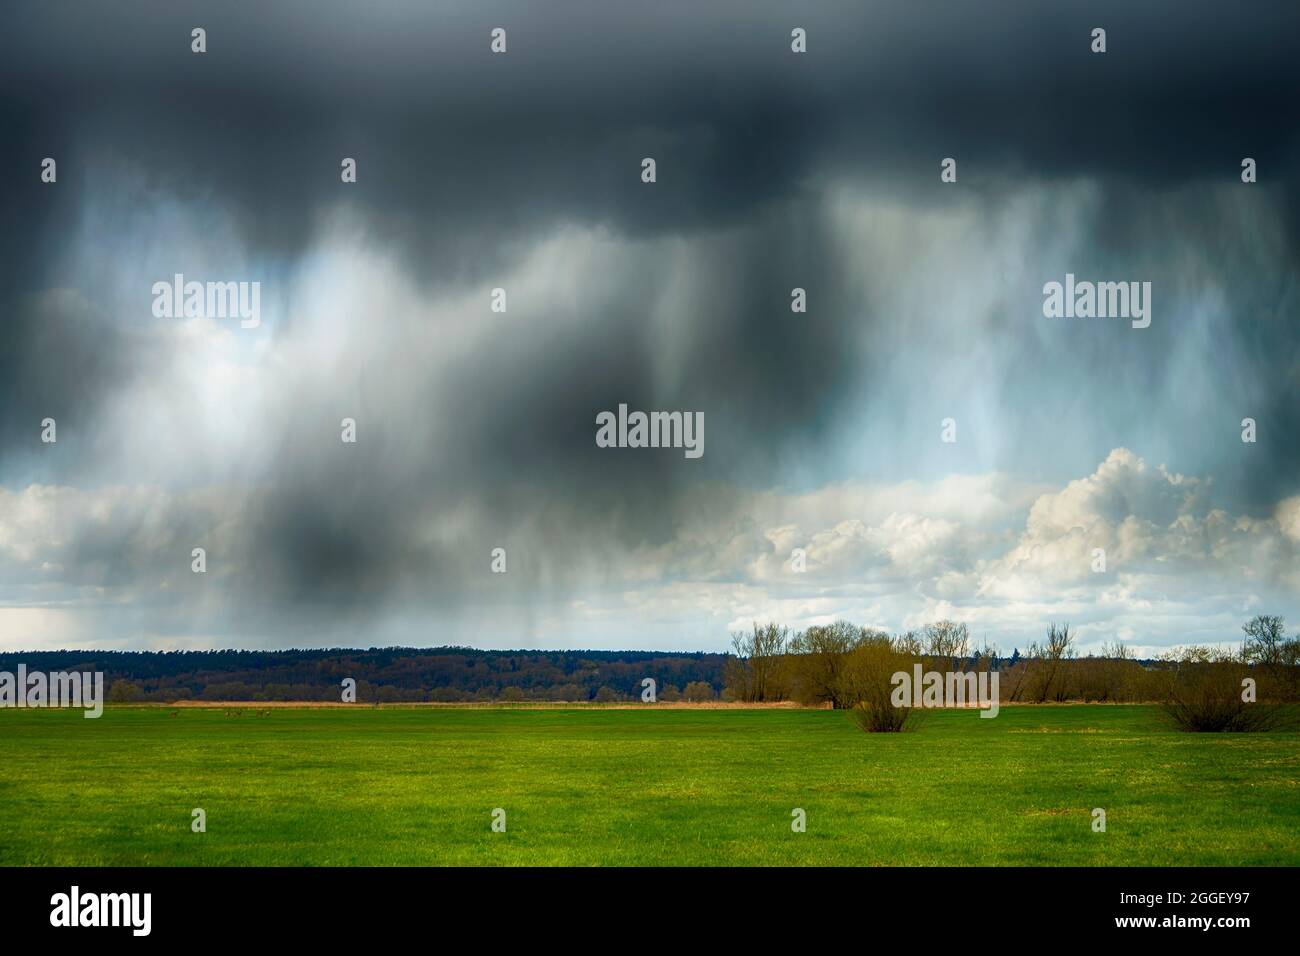 Big rain cloud over the landscape Stock Photo